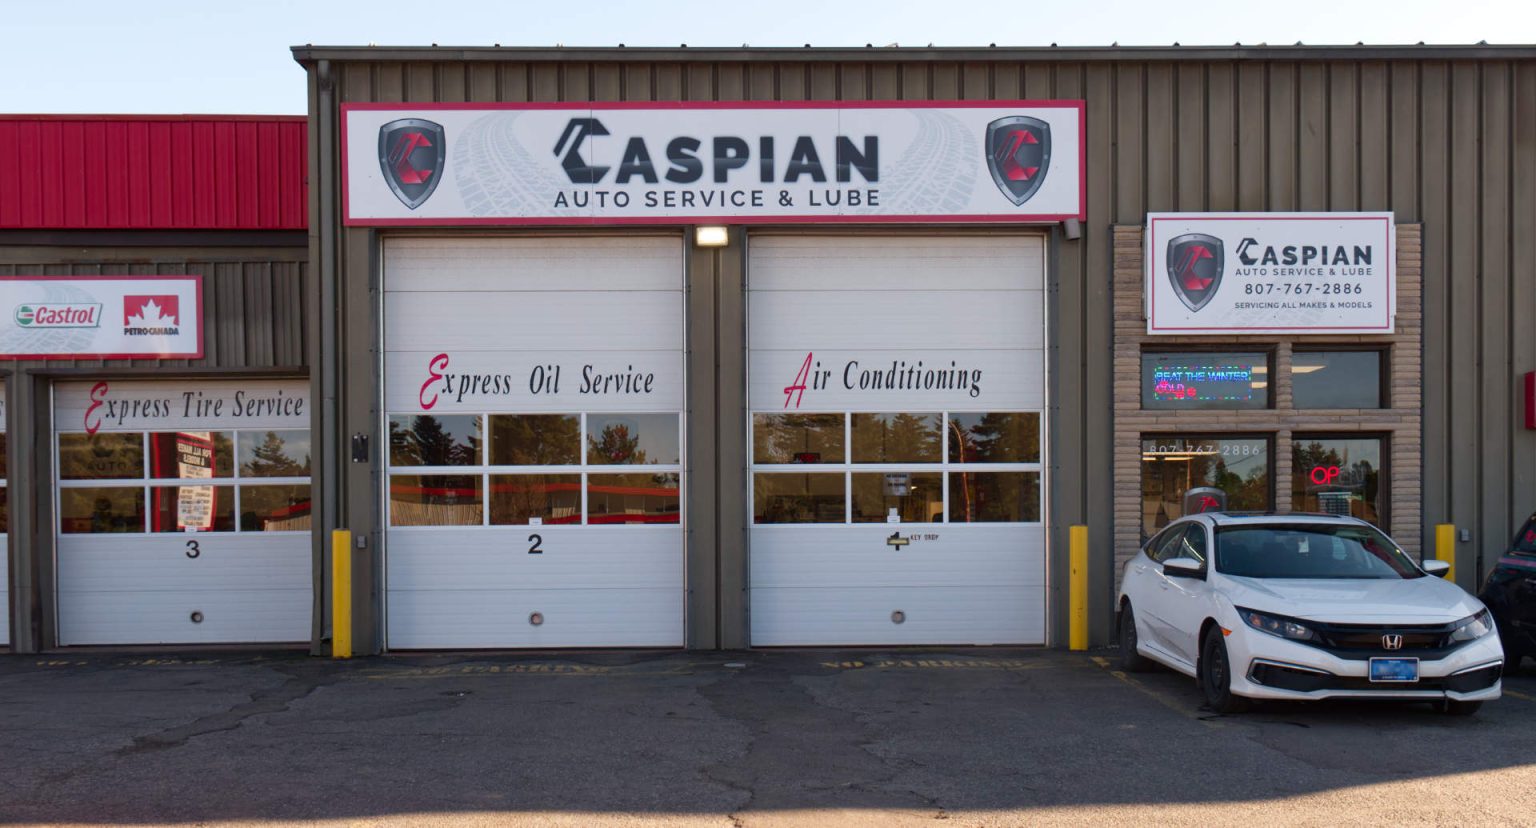 Caspian Auto Service & Lube Front of Store